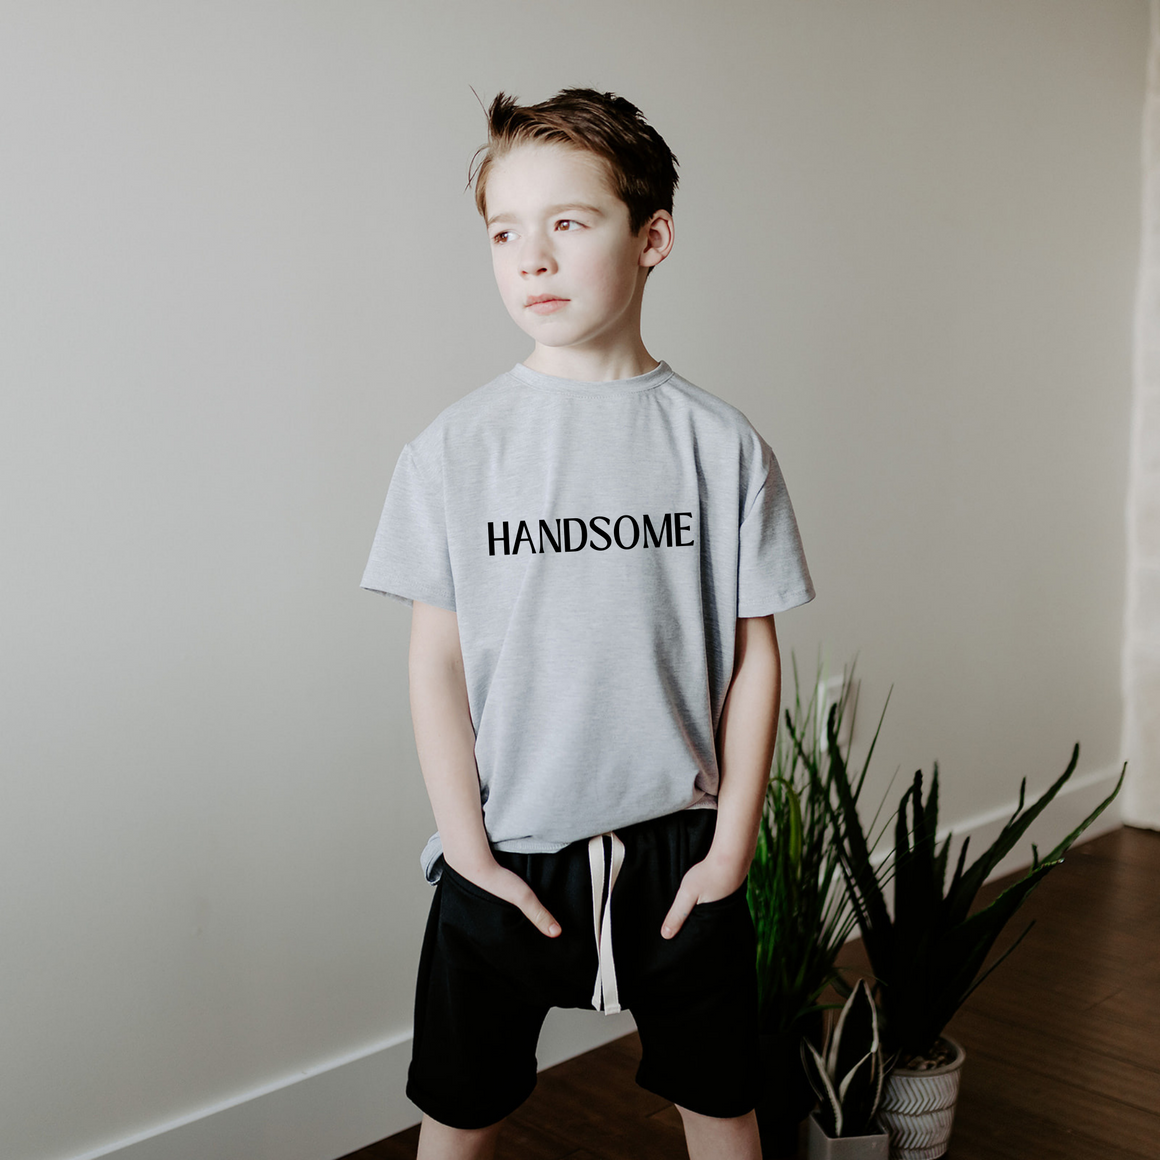 Handsome Tee Shirt Youth - Posh & Cozy